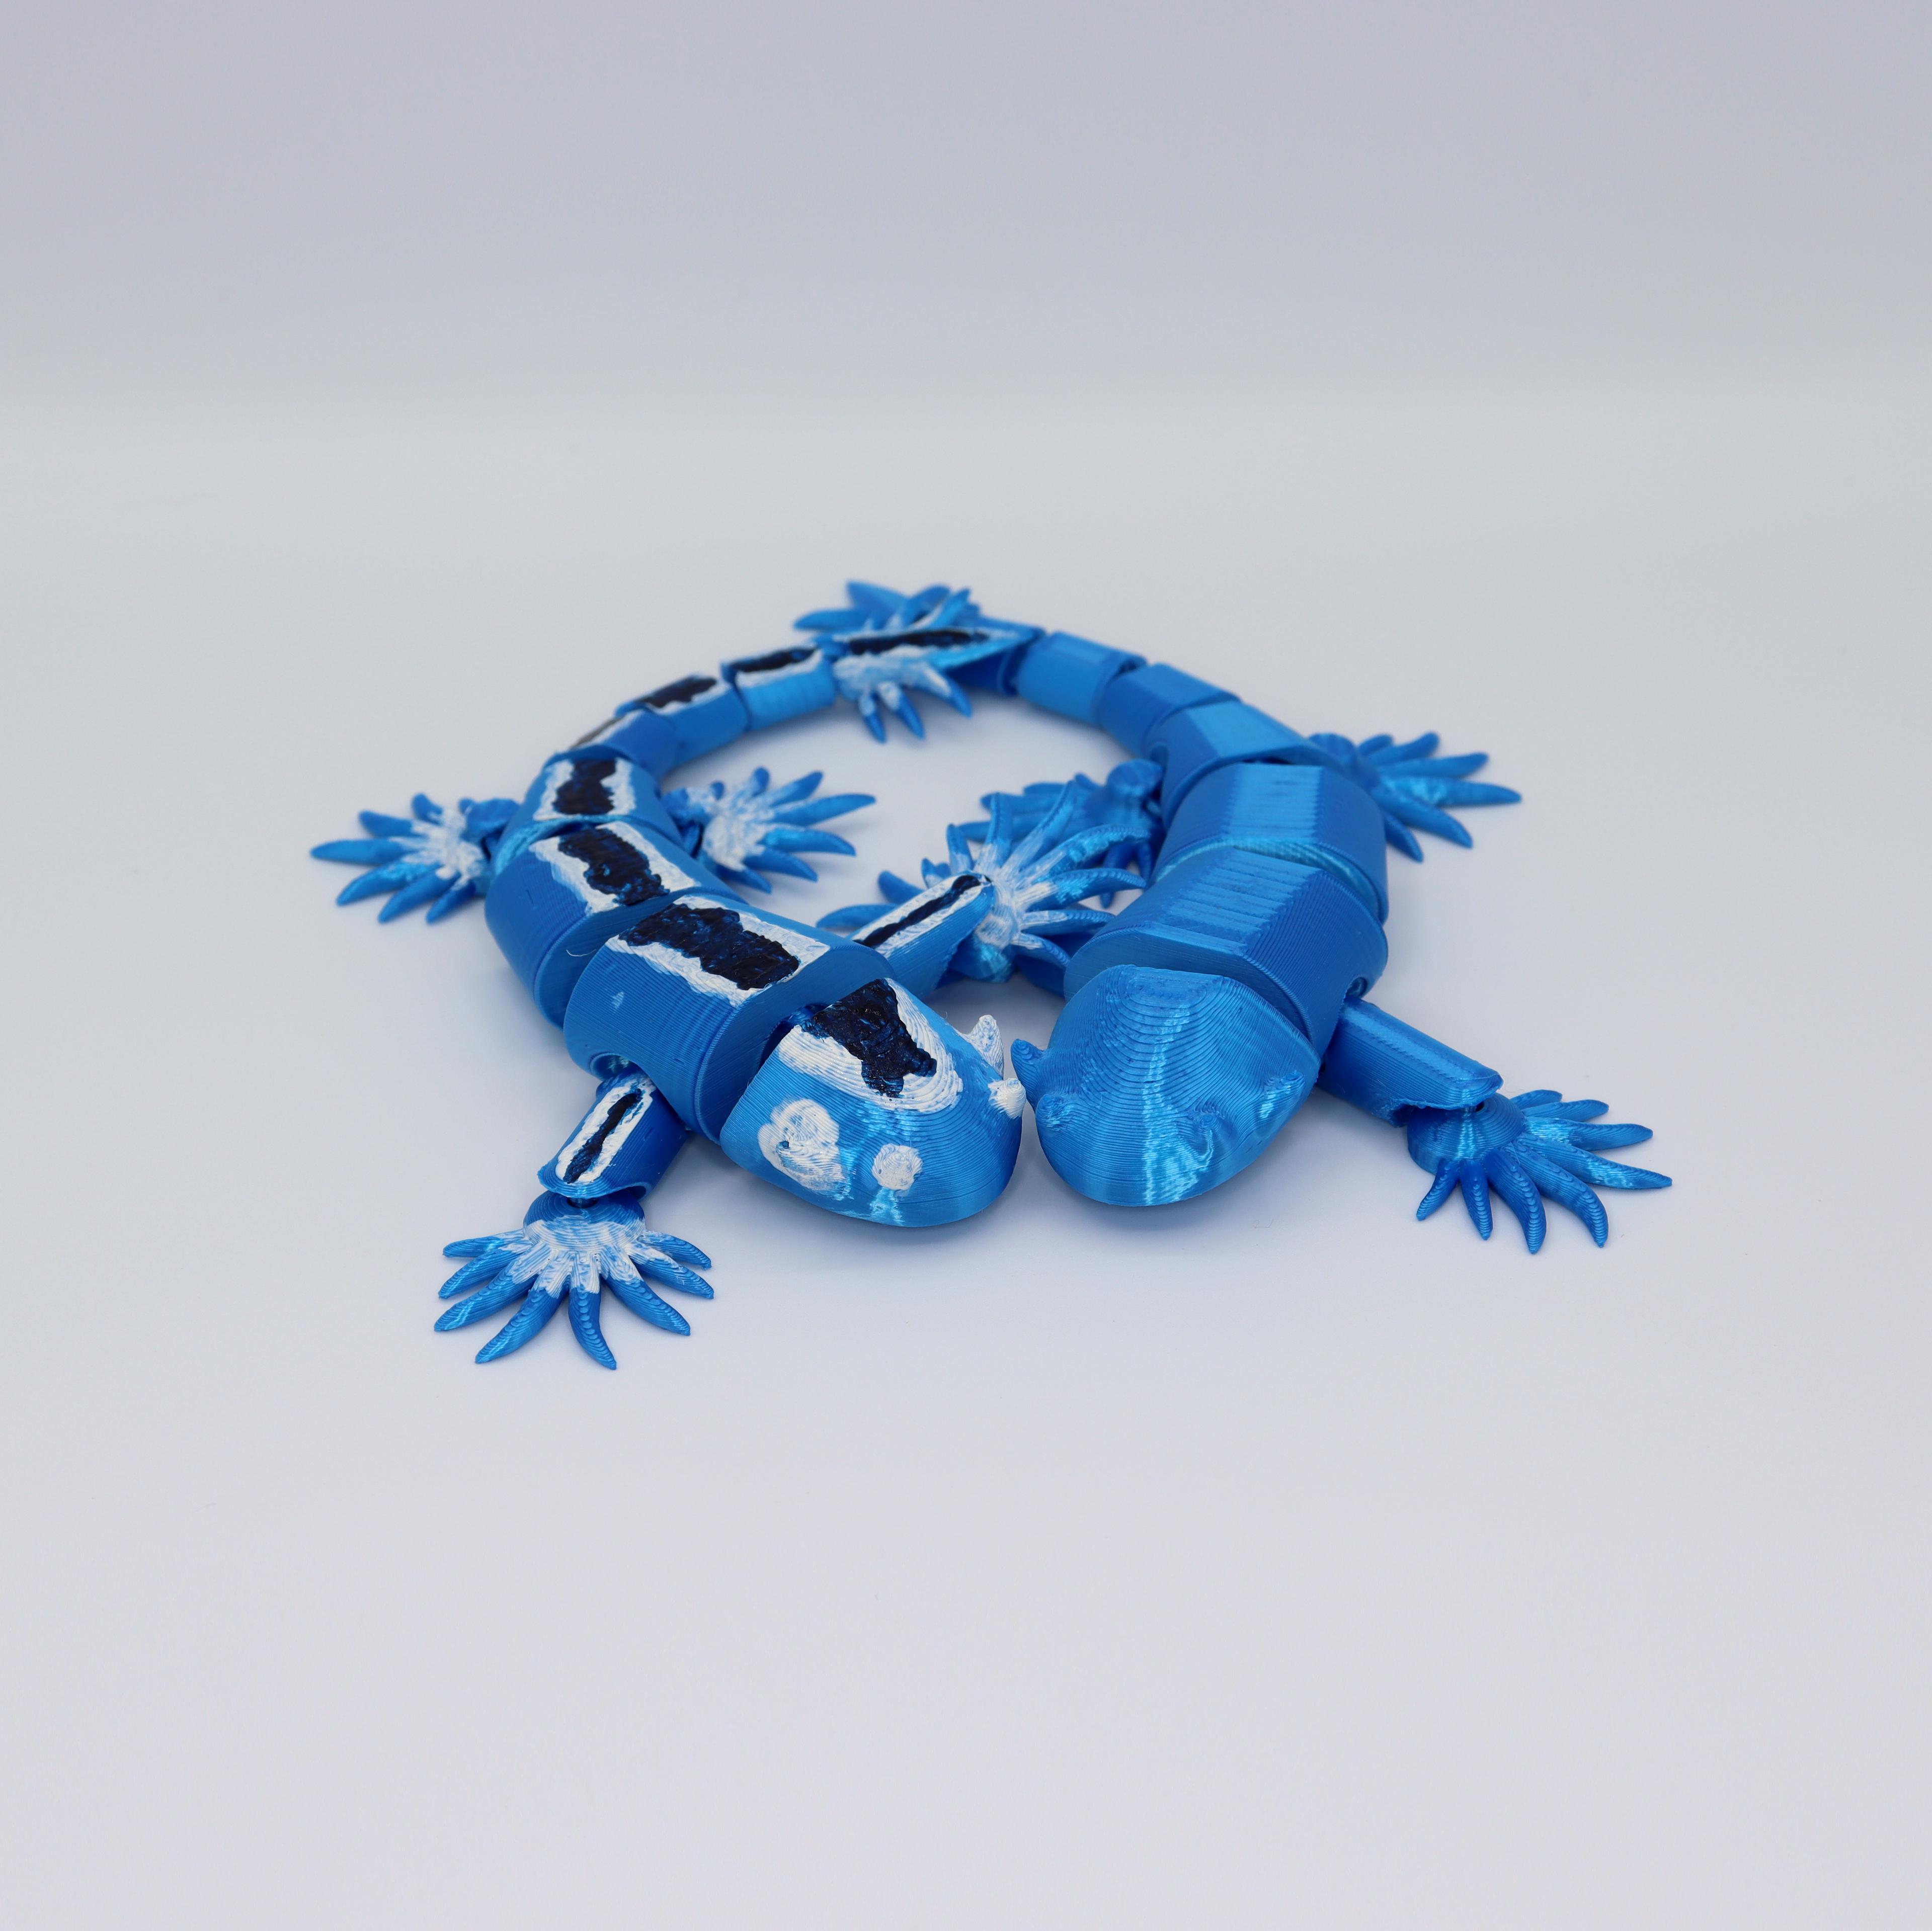 Blue Sea dragon articulated 3d model